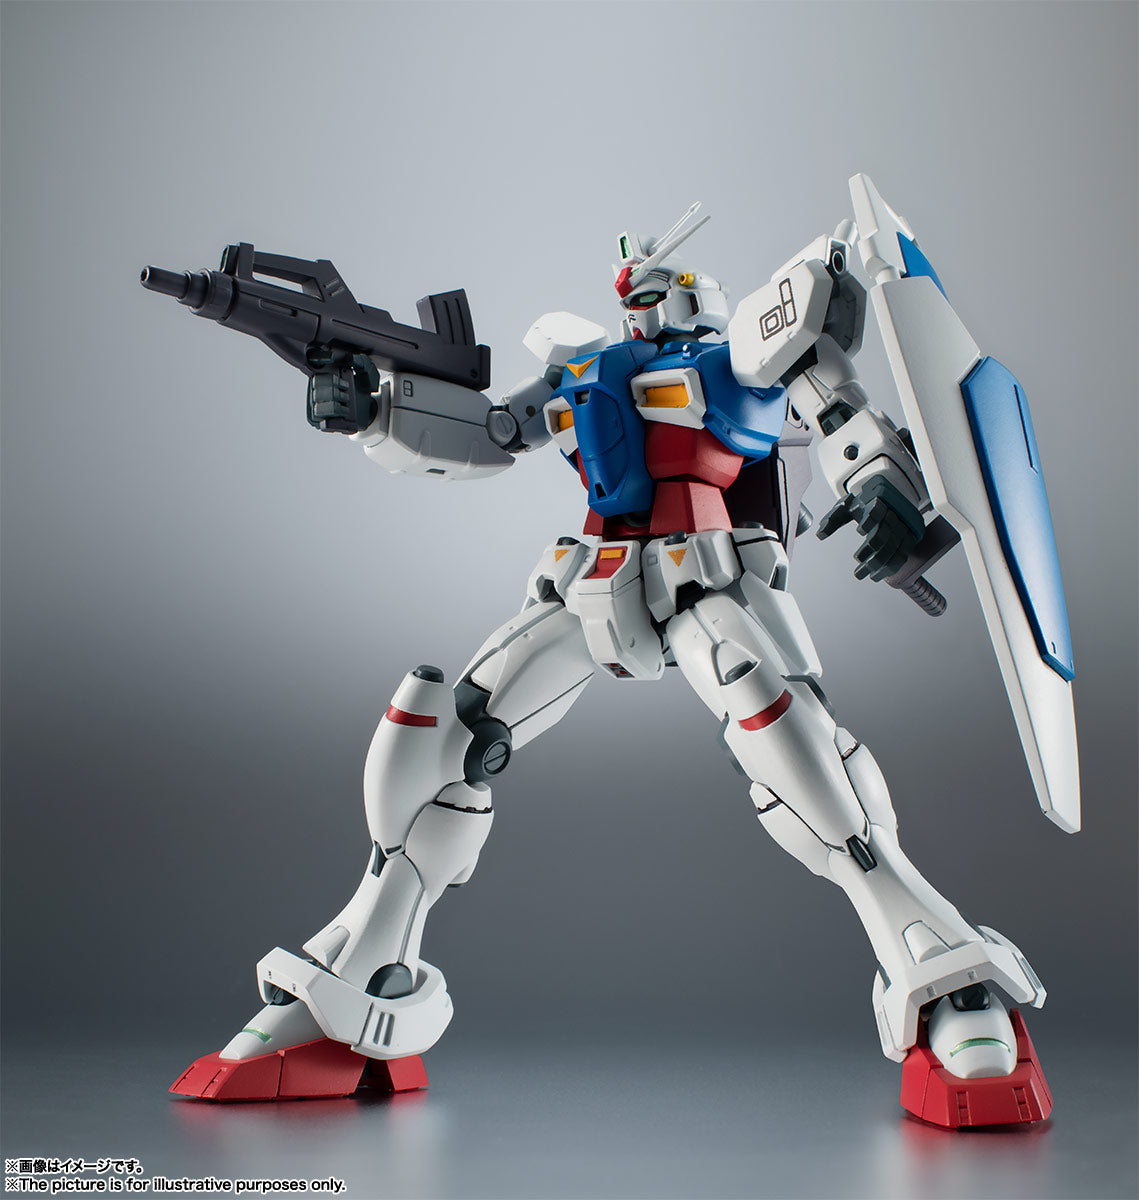 Robot Spirits Side MS "Mobile Suit Gundam 0083 Stardust Memory" RX-78GP01 Gundam 1 Ver. A.N.I.M.E. | animota